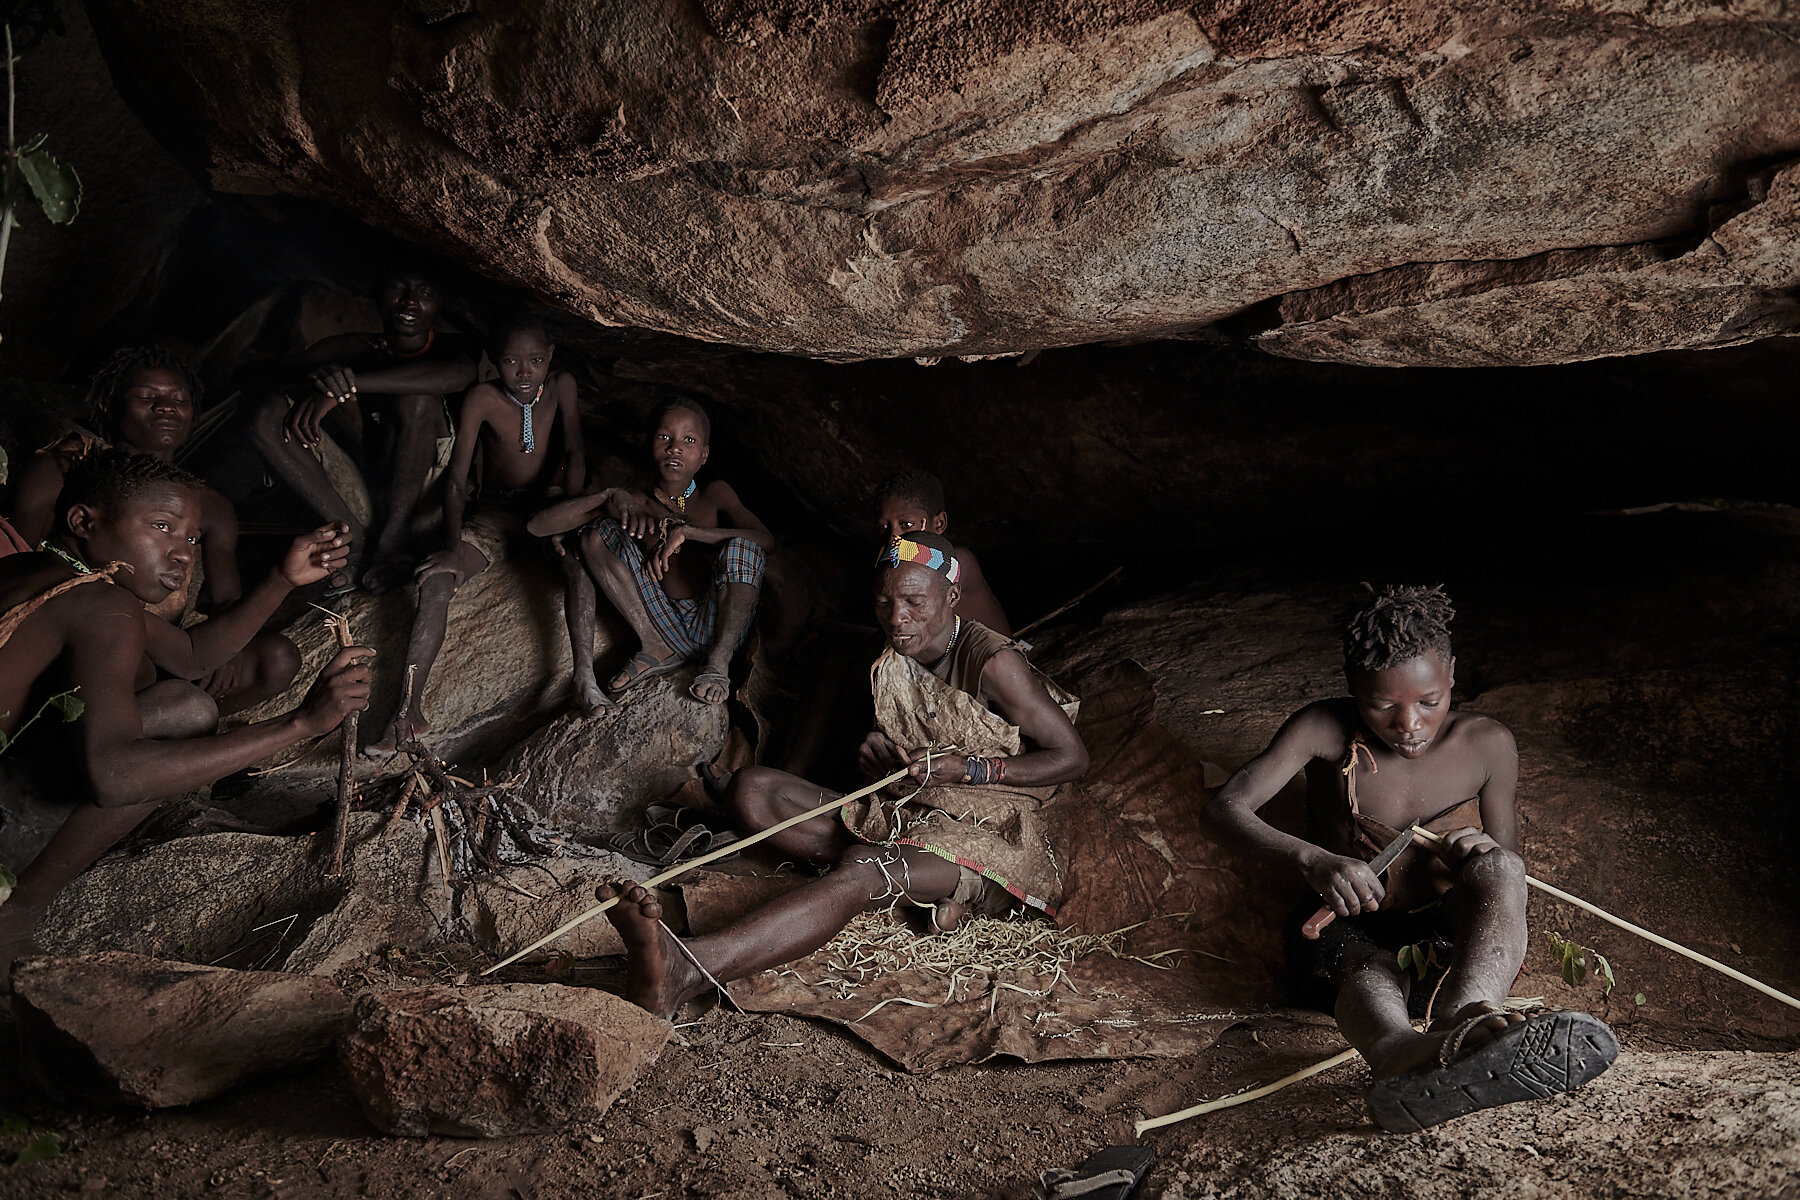 Hadjabe tribe preparing for the day's hunt, Tanzania